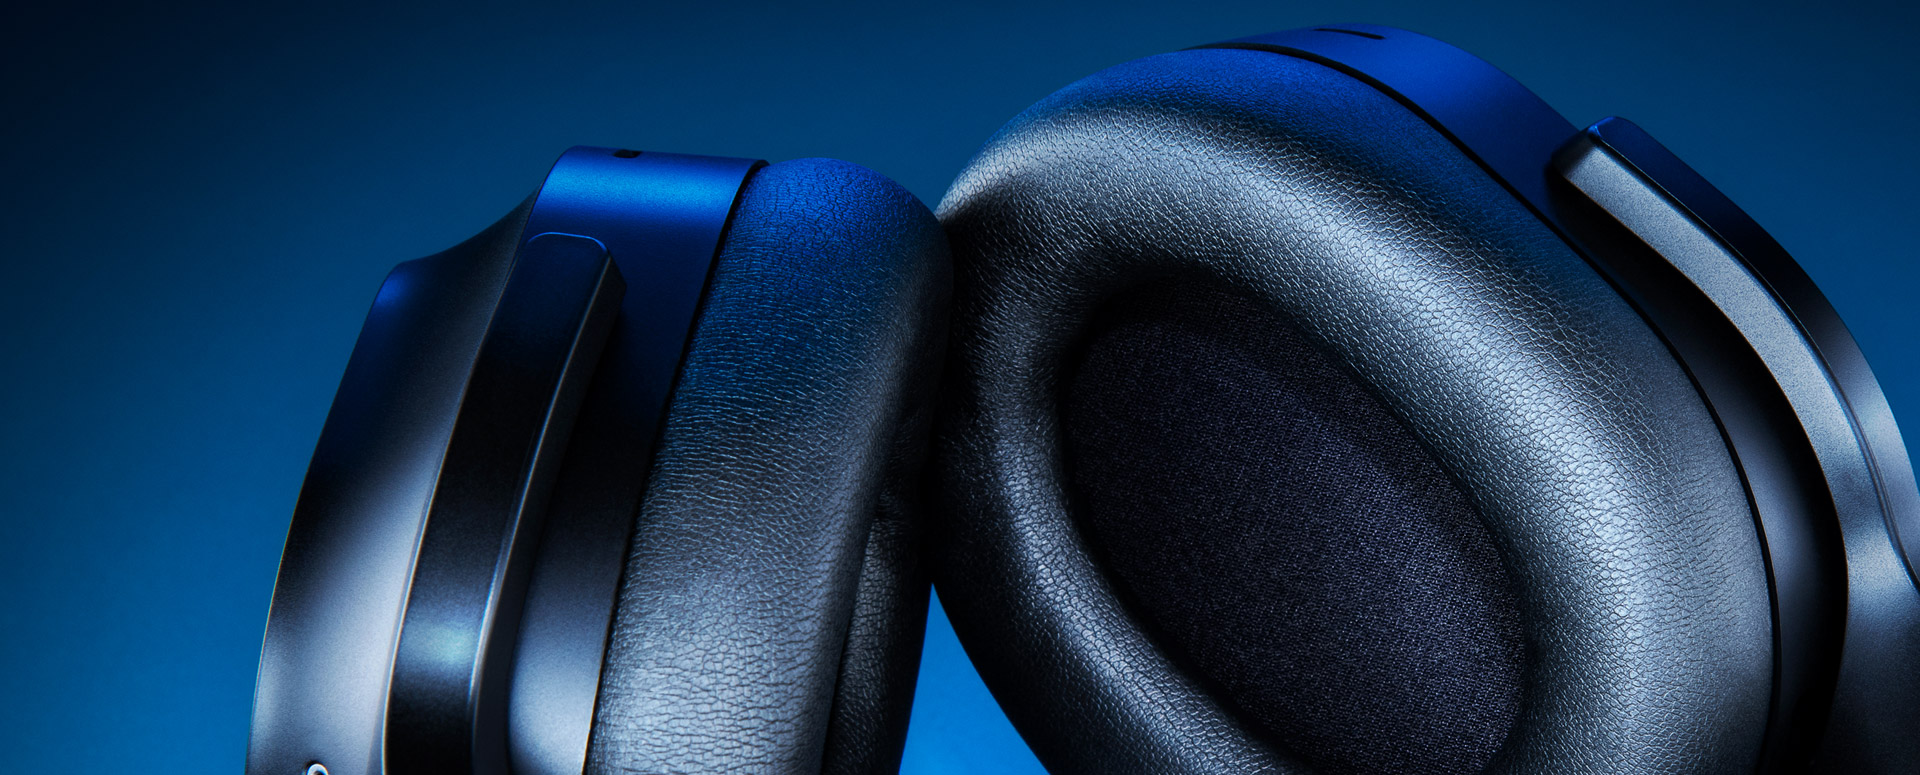 Razer Barracuda Pro Wireless Gaming Headset,Headset,หูฟังไร้สาย,หูฟังเสียงดี,headphones,หูฟังบลูทูธ,หูฟังครอบหู,หูฟังเกมมิ่ง